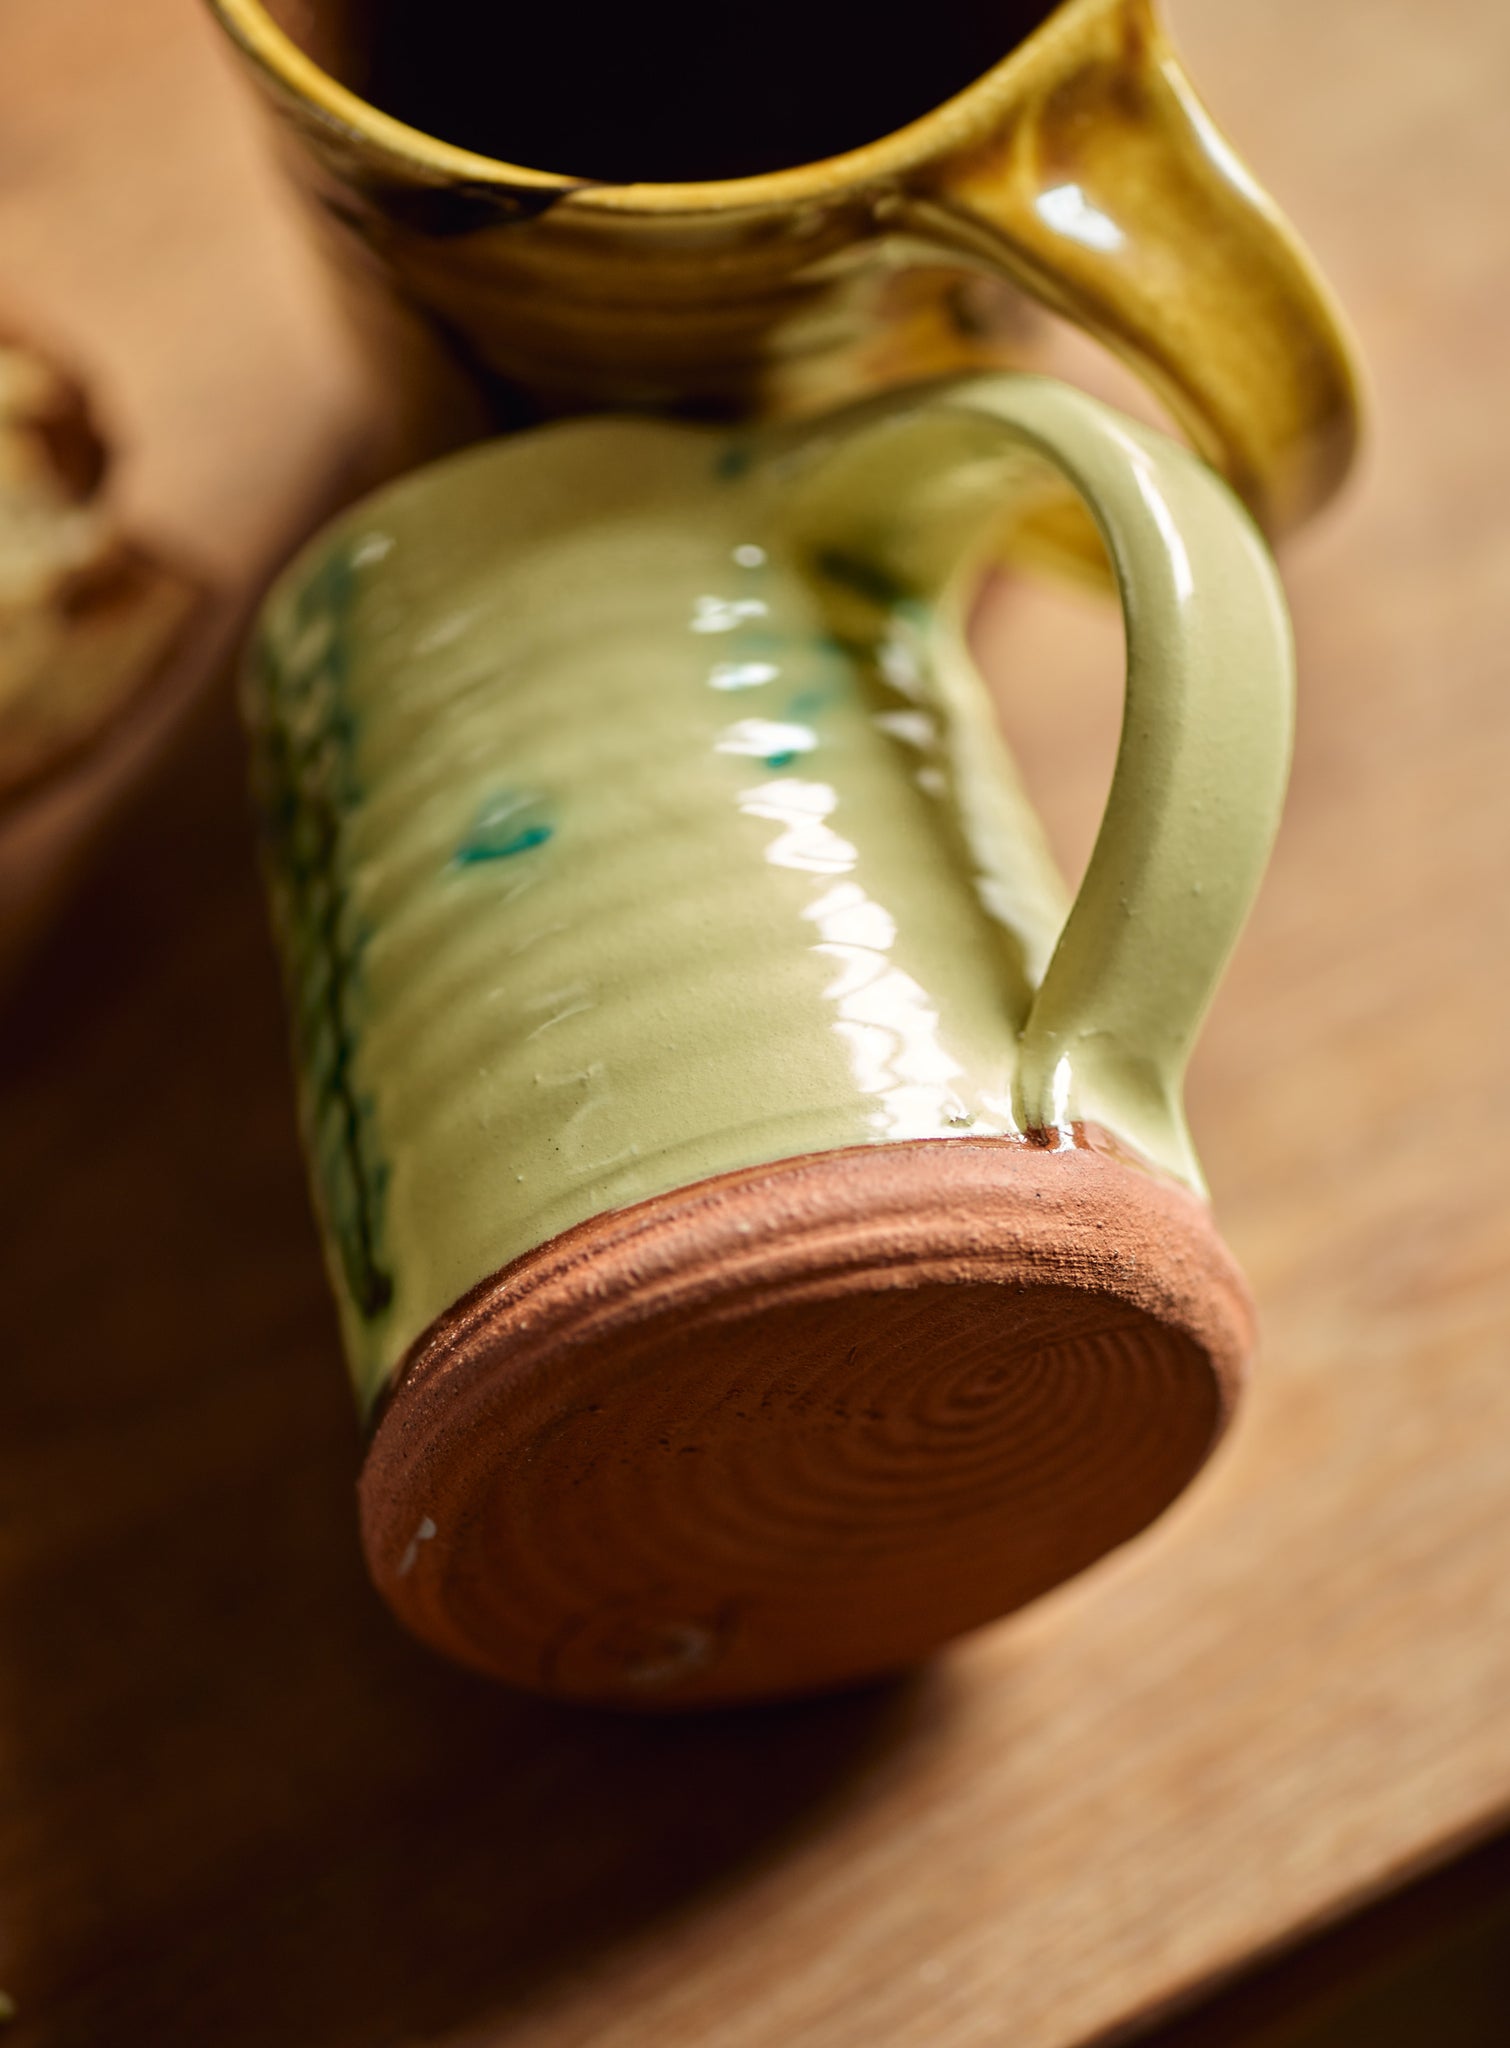 Handmade Terracotta Coffee Mug